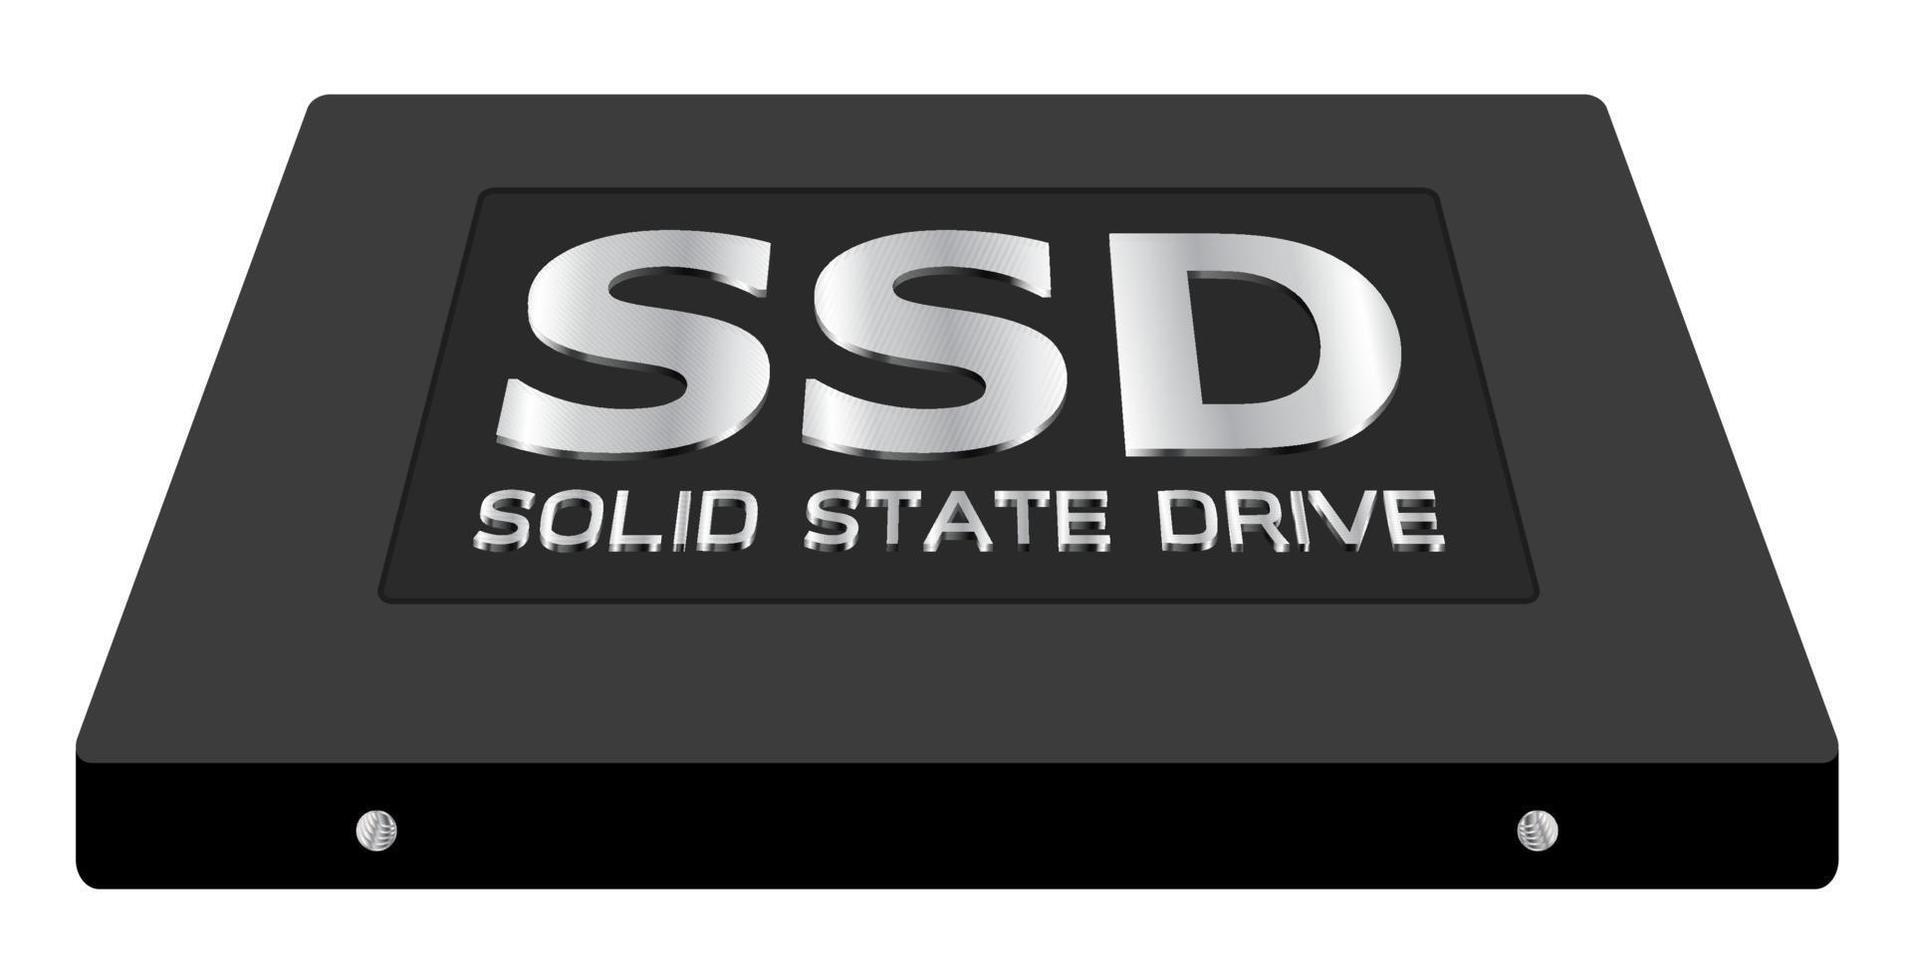 SSD-enhet eller SSD-enhet på en vit bakgrund vektor